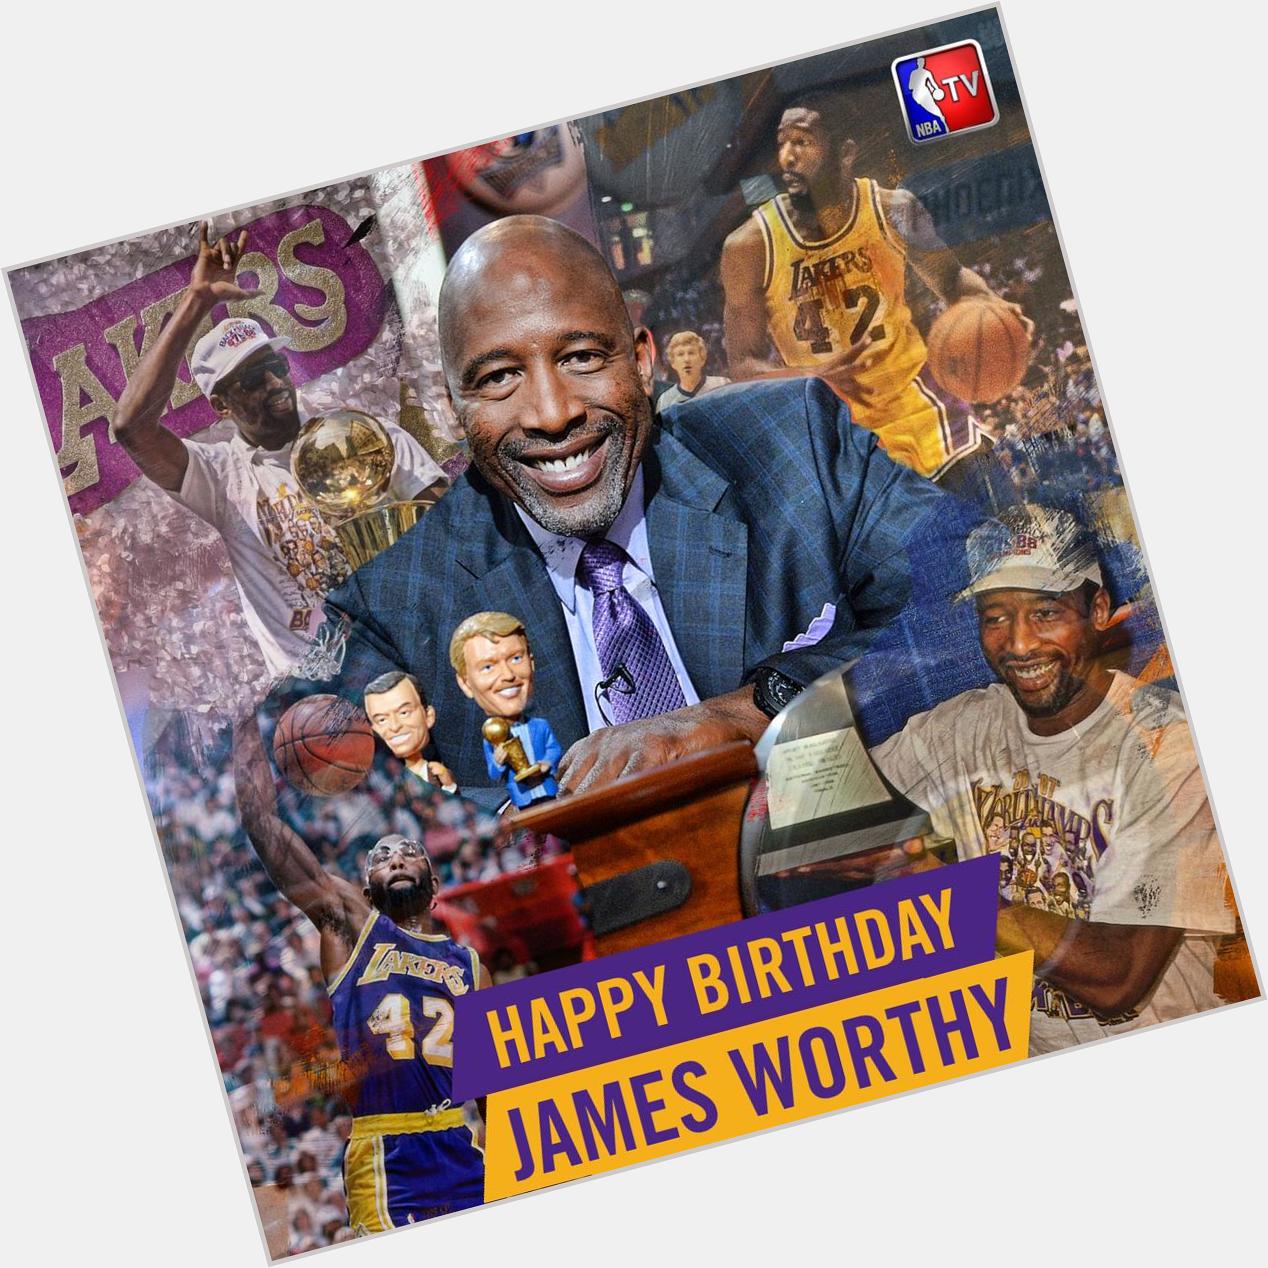 Happy Birthday Lakers Legend Big Game James Worthy!  